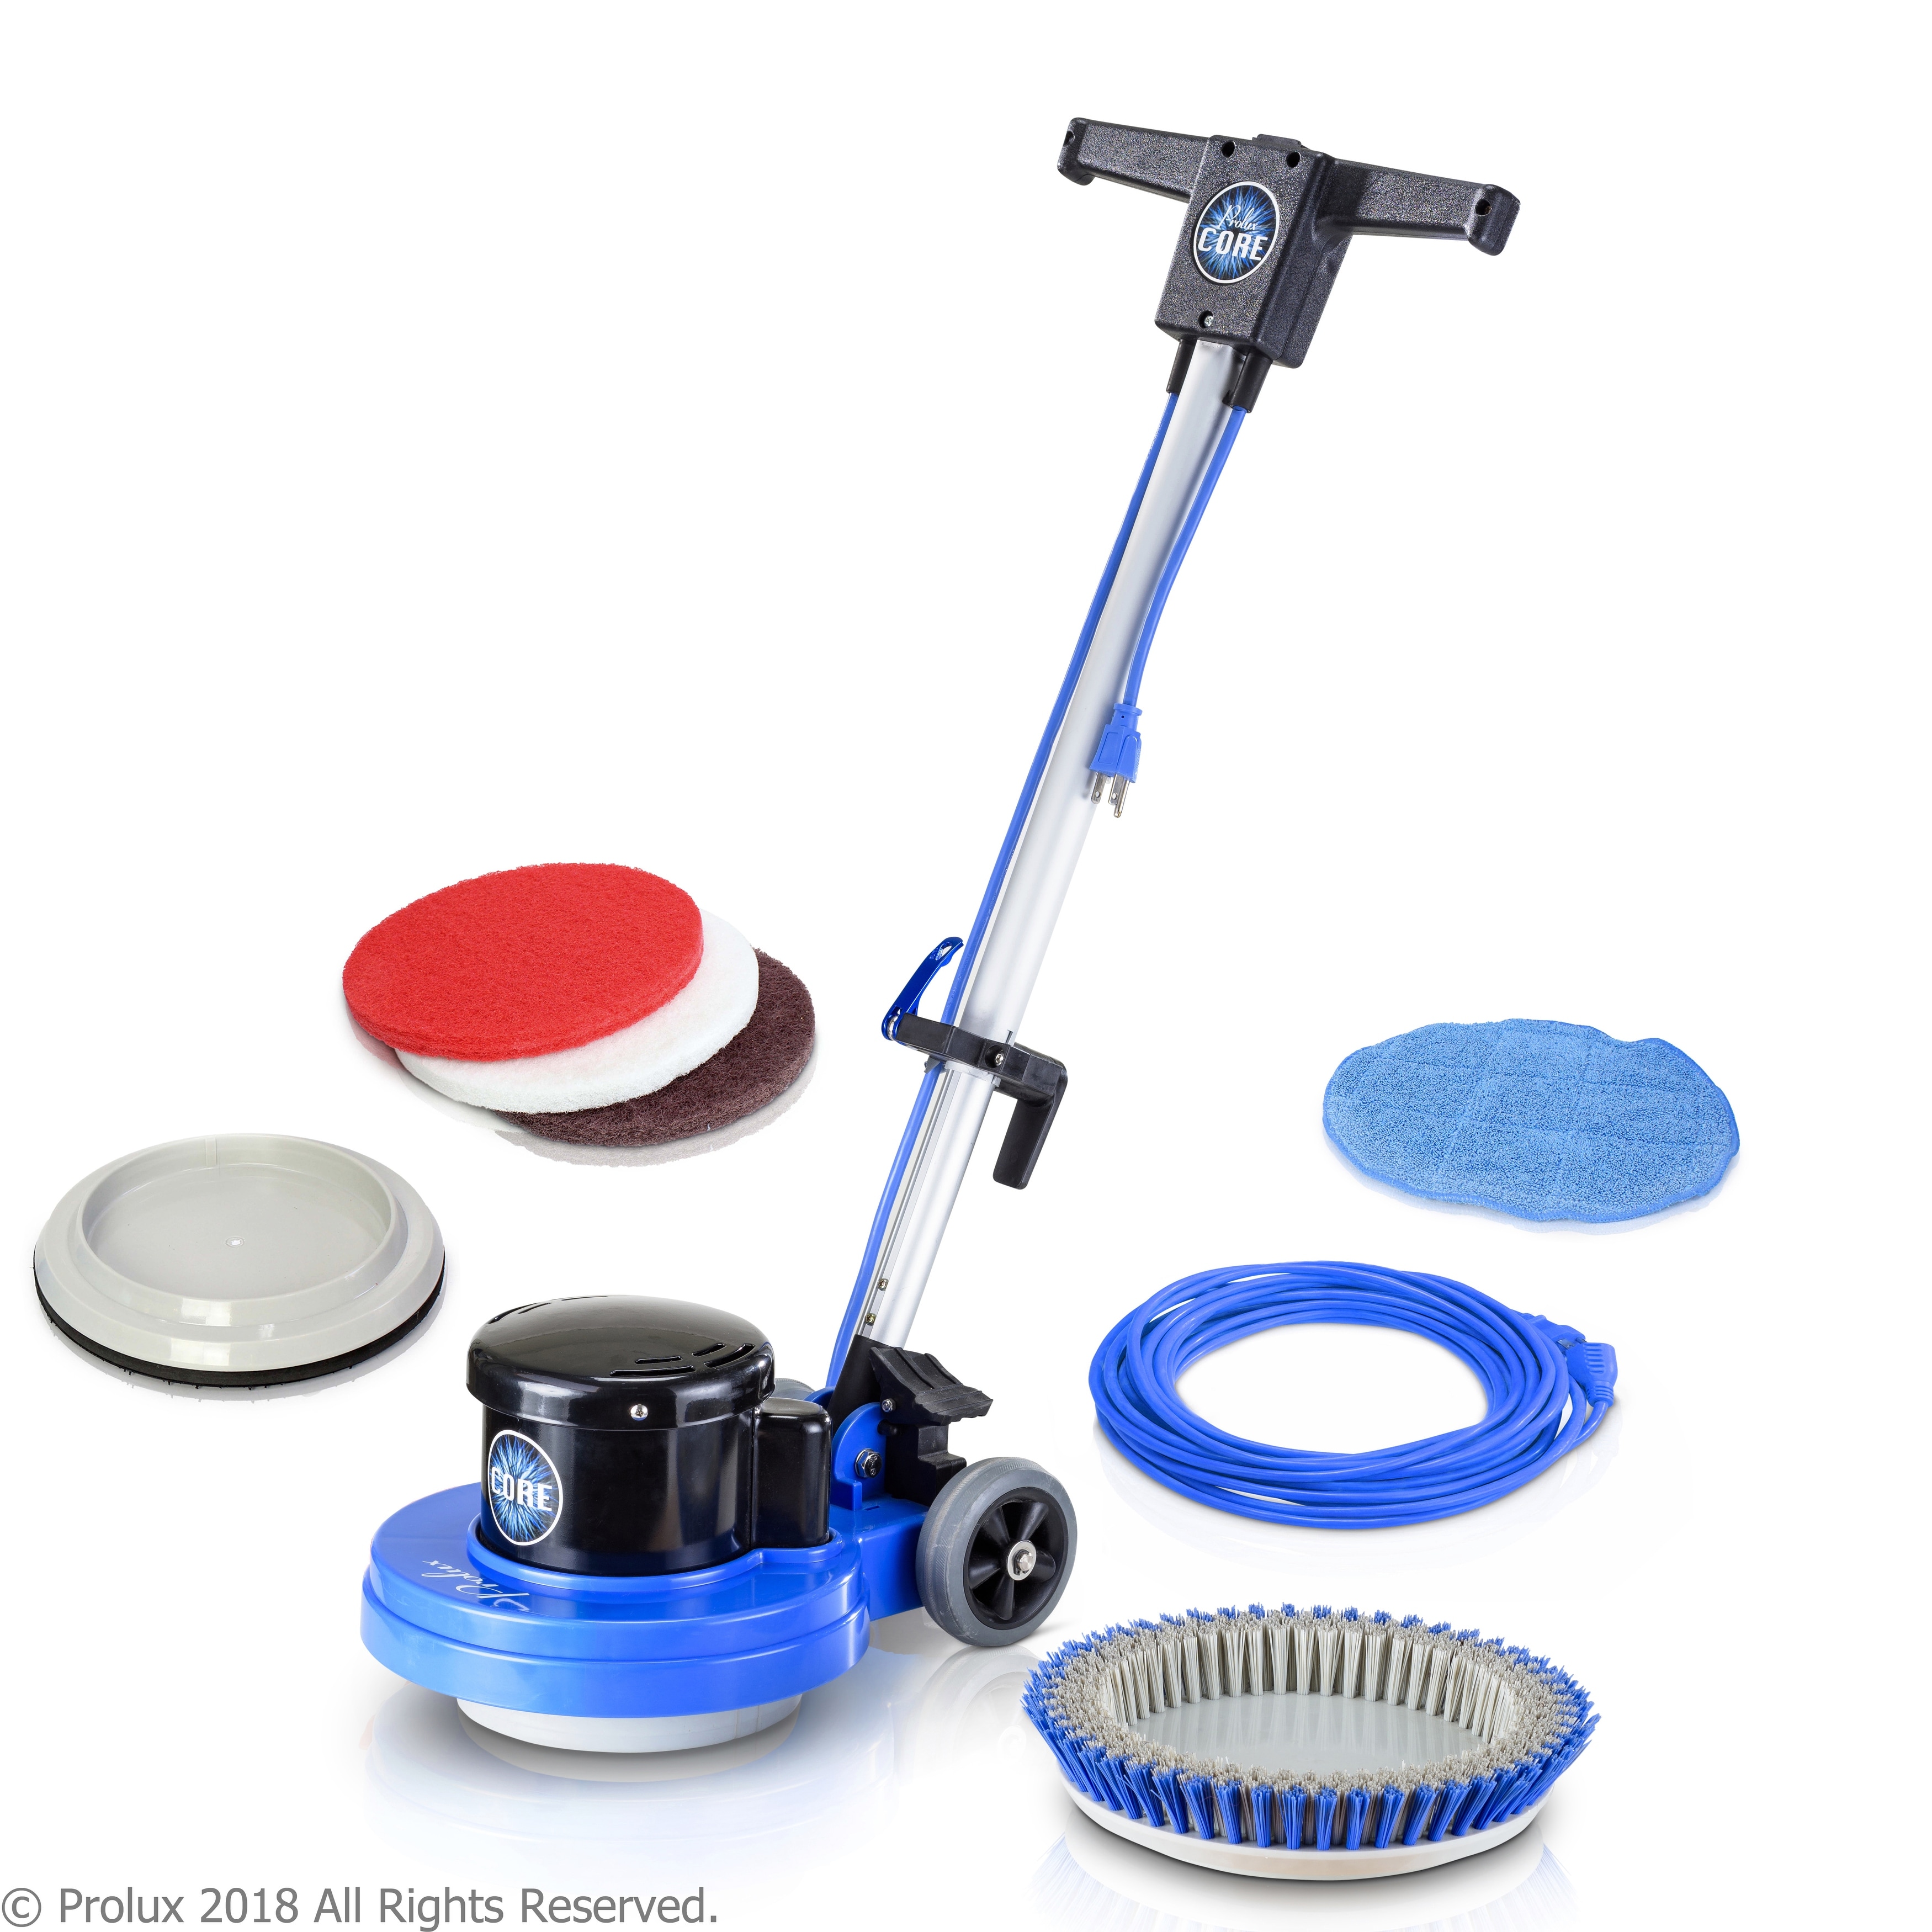 Prolux Core Heavy-Duty Commercial Floor Buffer & Scrubber LOADED - Blue - 13-inch cleaning path